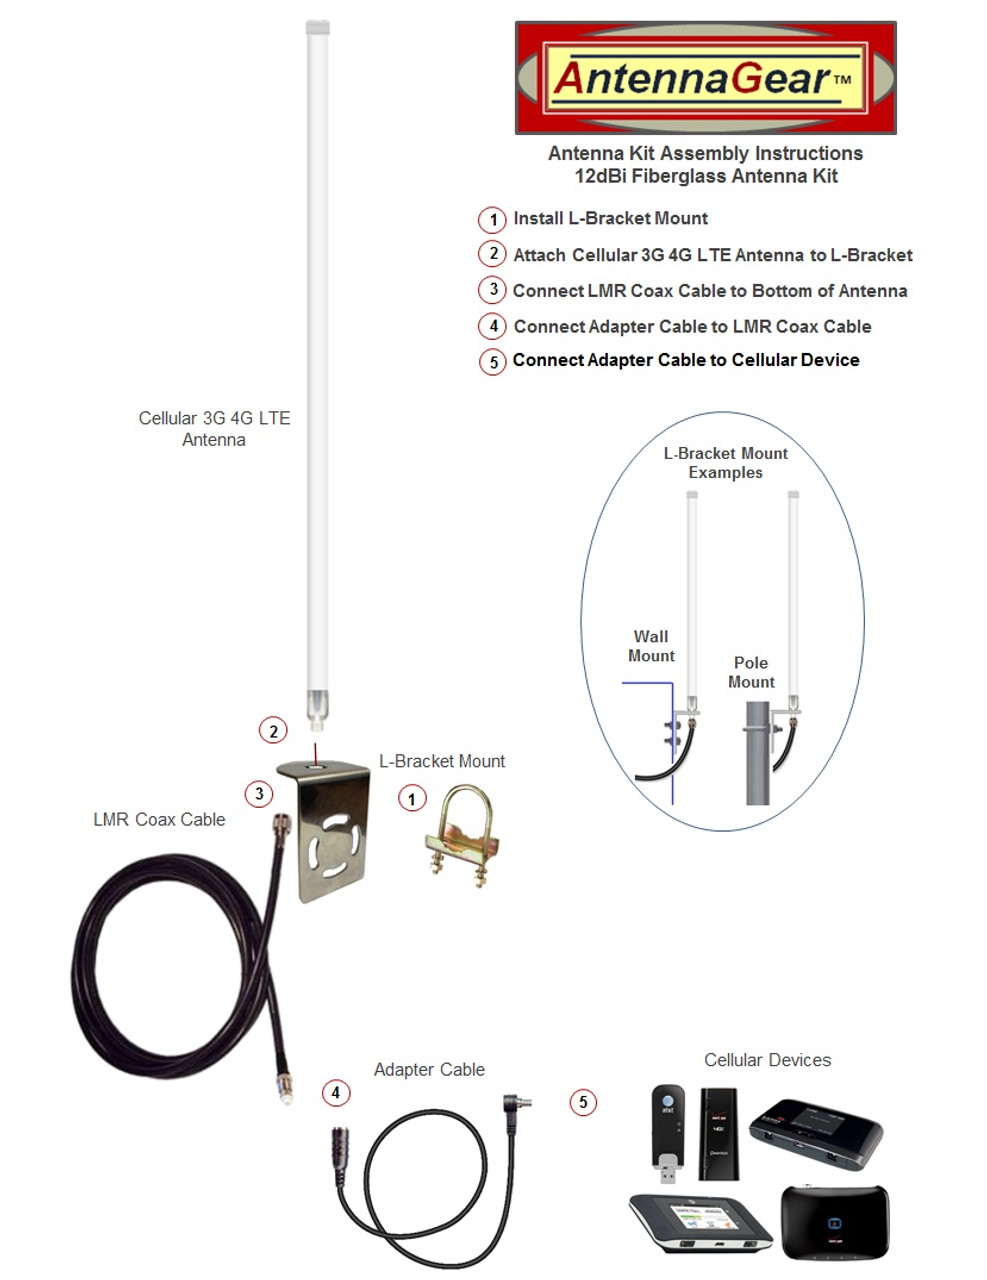 12dB Fiberglass 4G LTE XLTE Antenna Kit for AT&T Netgear Nighthawk M1 MR 1100 w/ Cable Length Options.